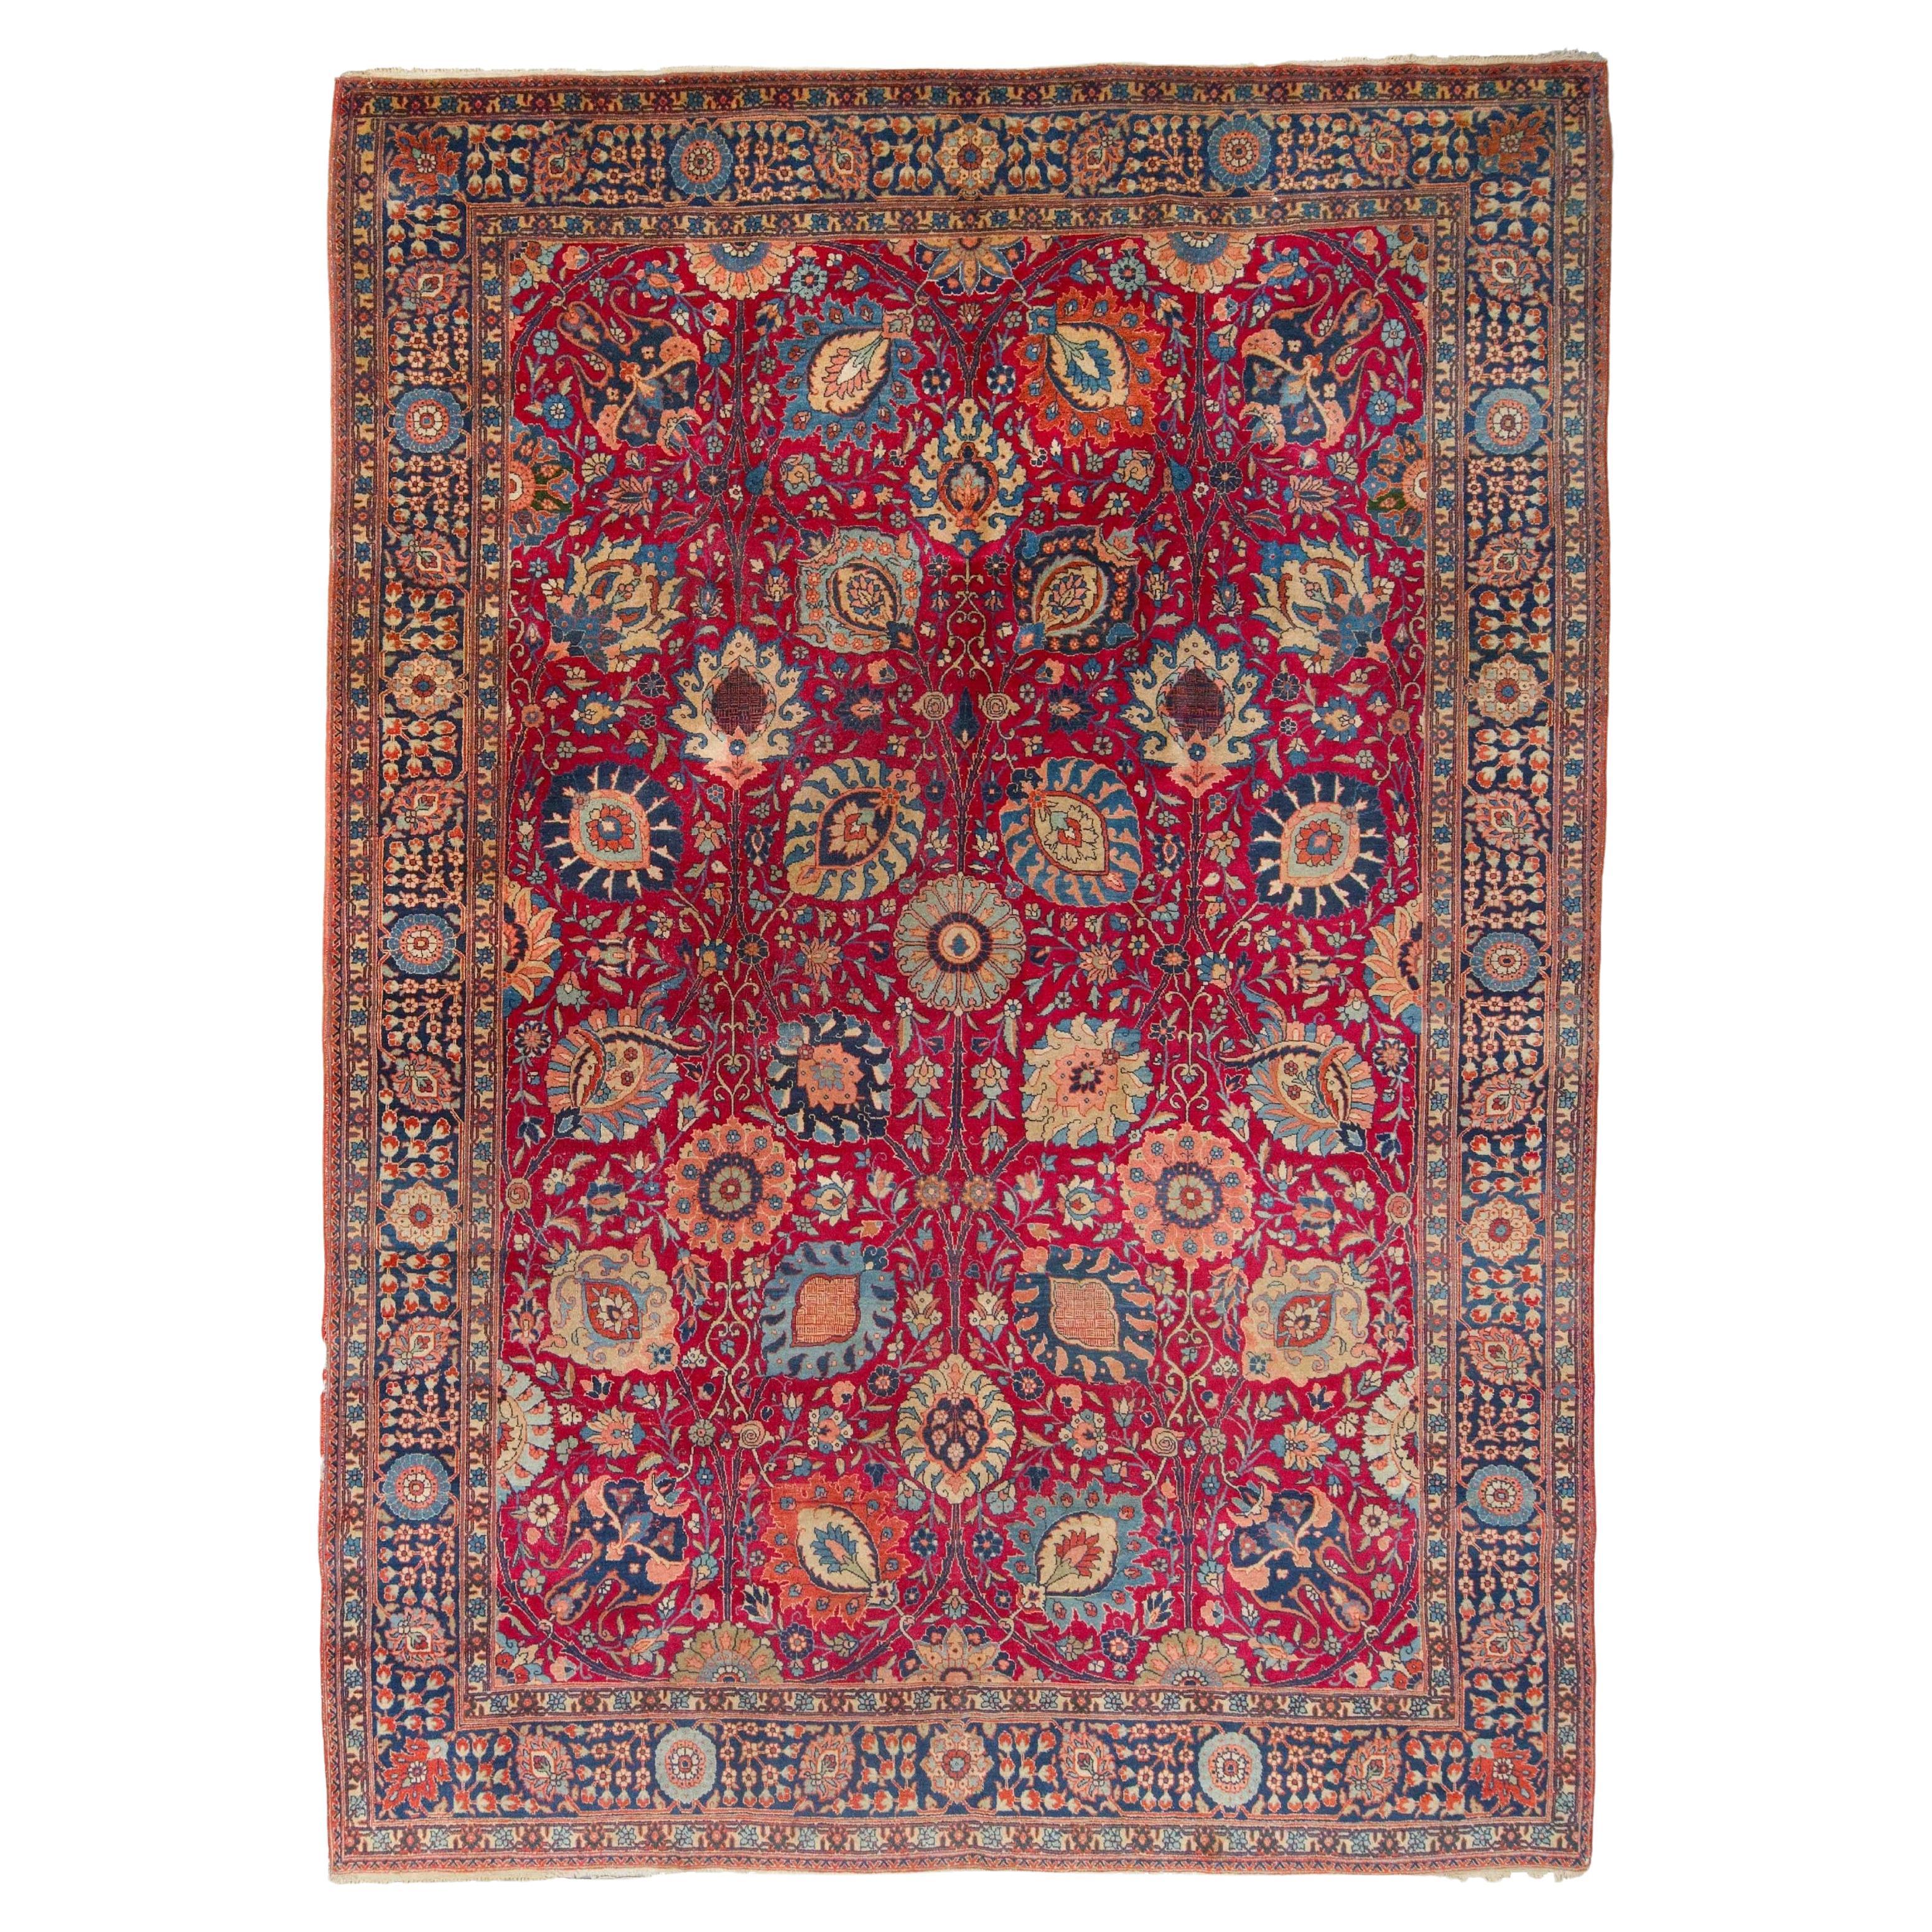 Antique Tabriz Rug - Late of 19th Century Tebriz Rug, Antique Carpet